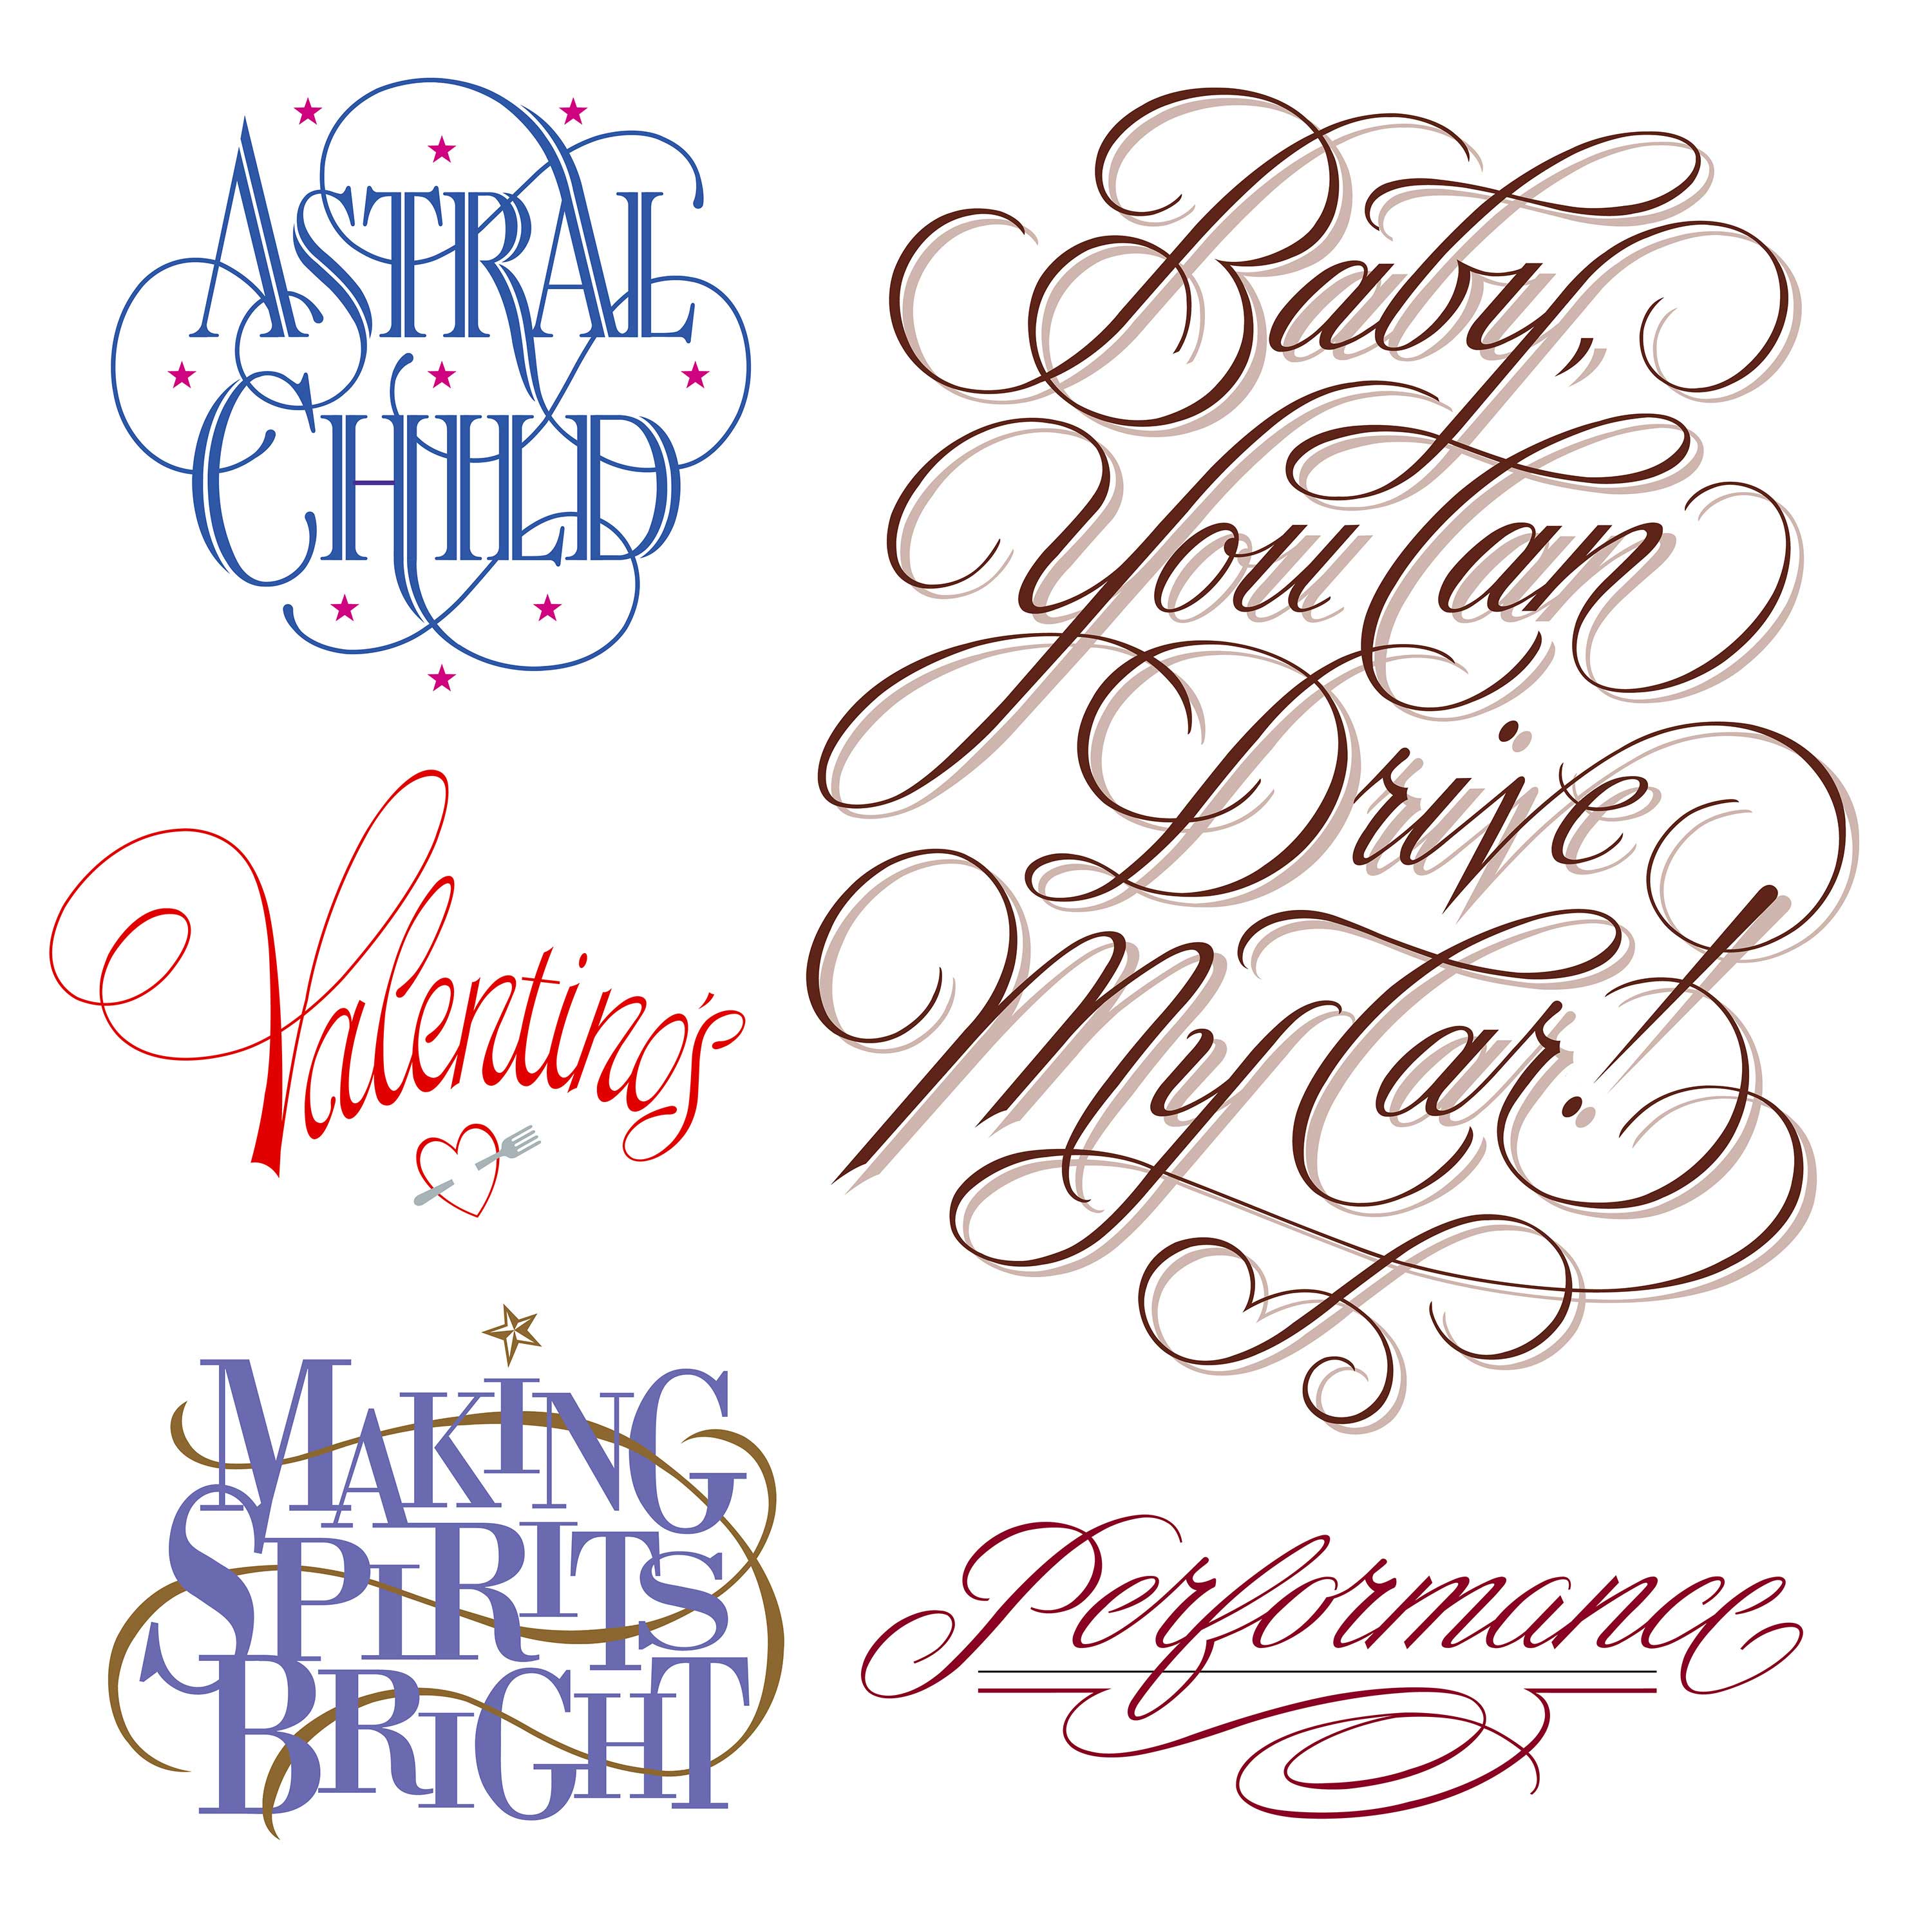 Kelly Hume Illustration typography